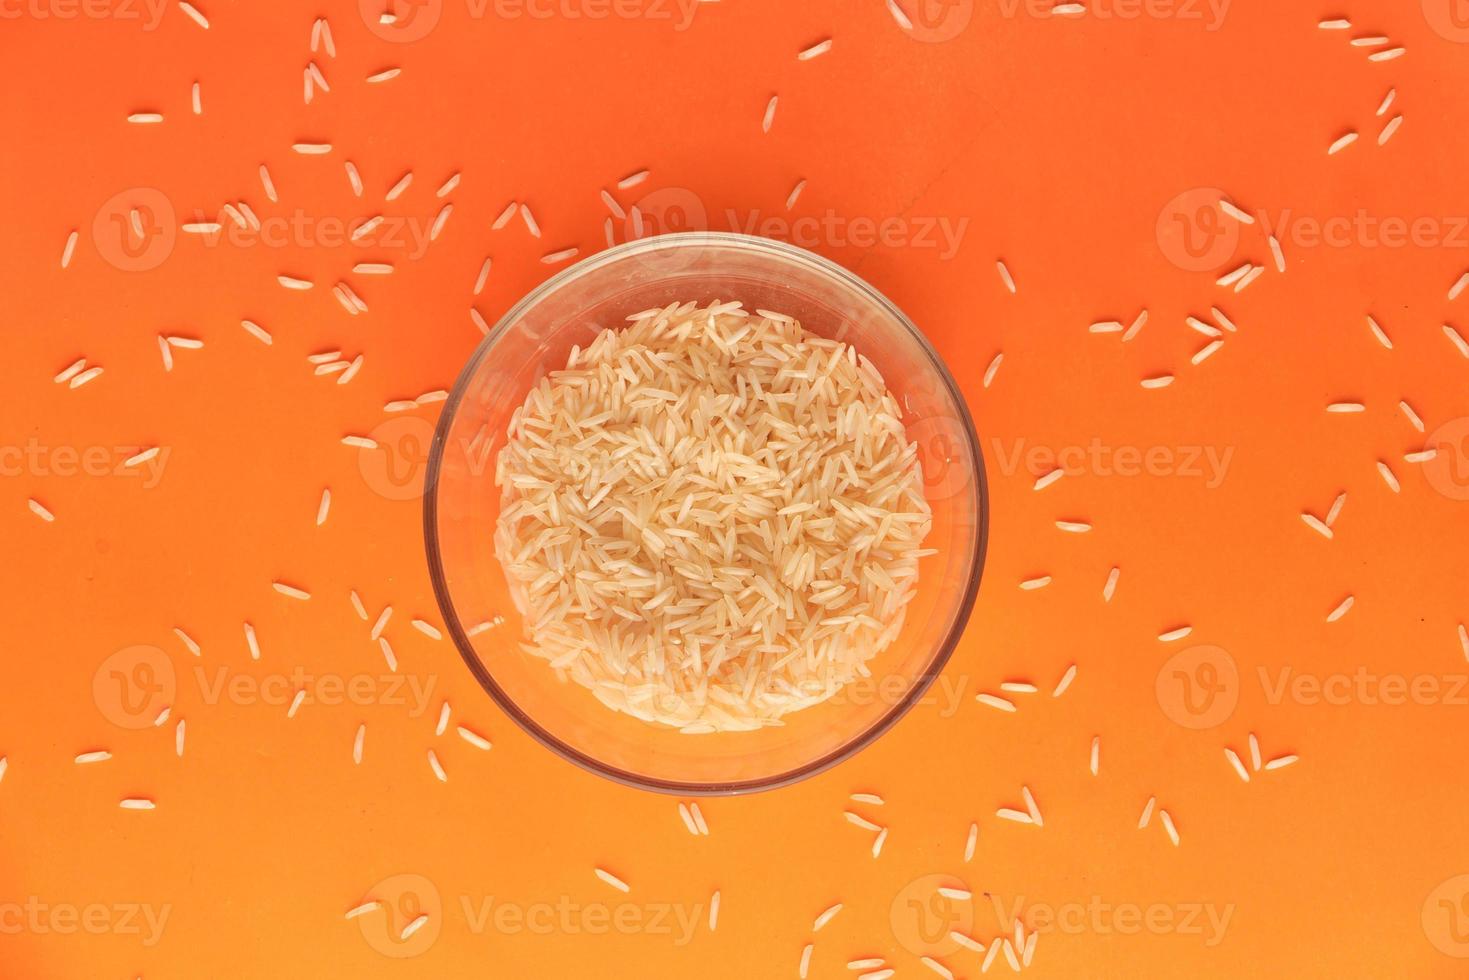 close-up van langkorrelige bruine rijst op oranje achtergrond foto